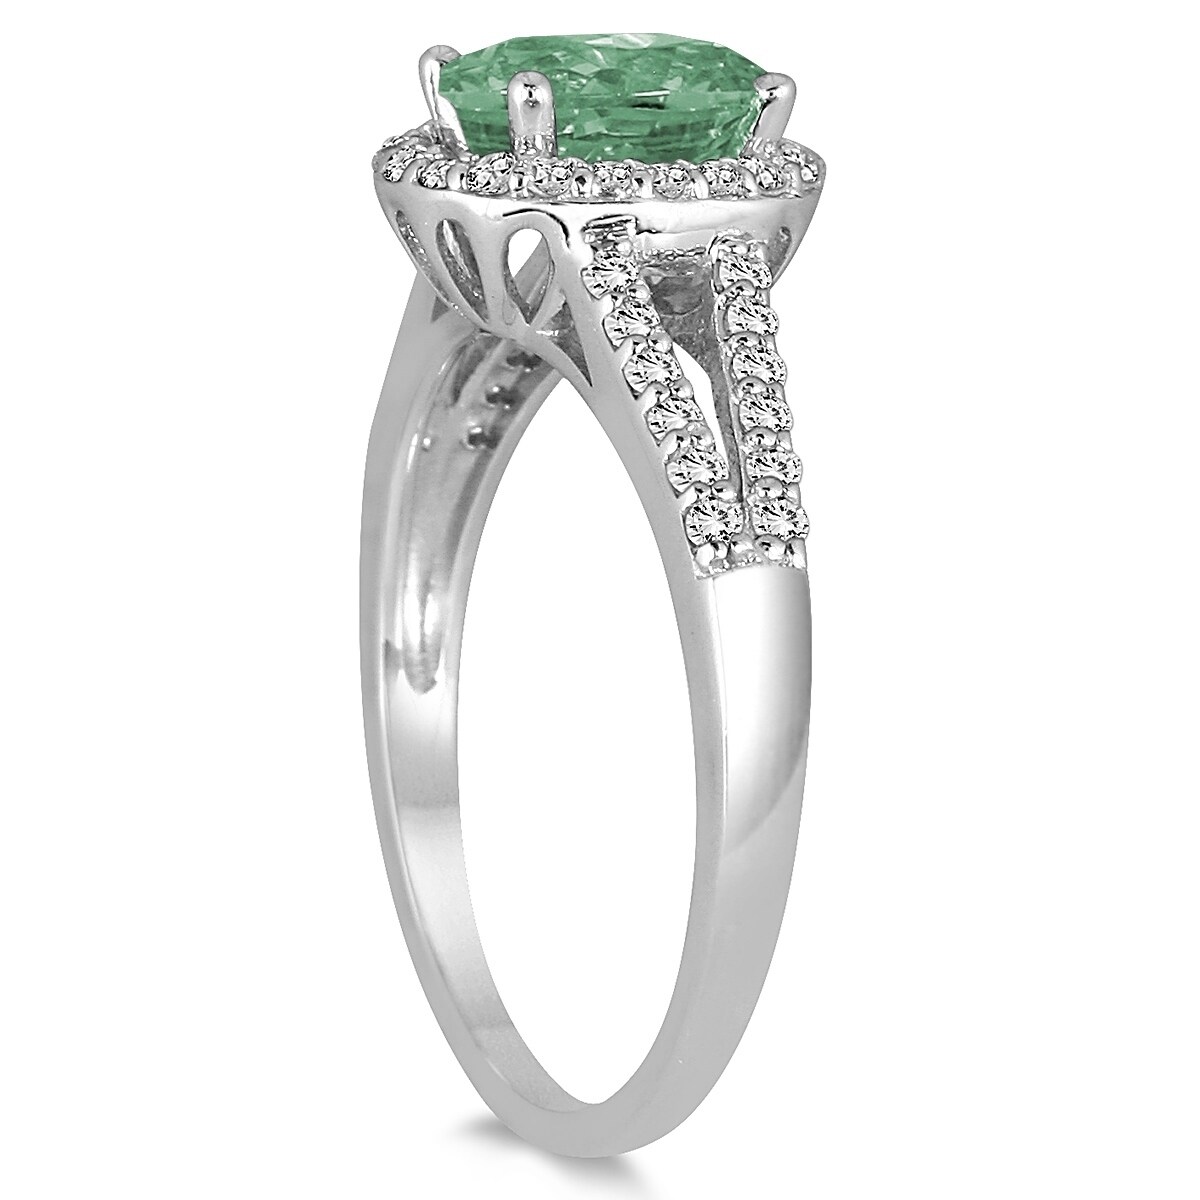 sizes 5-10 10K White Gold Diamond Natural Green Amethyst & Tiger Eye 2-stone Ring Oval 8x6mm